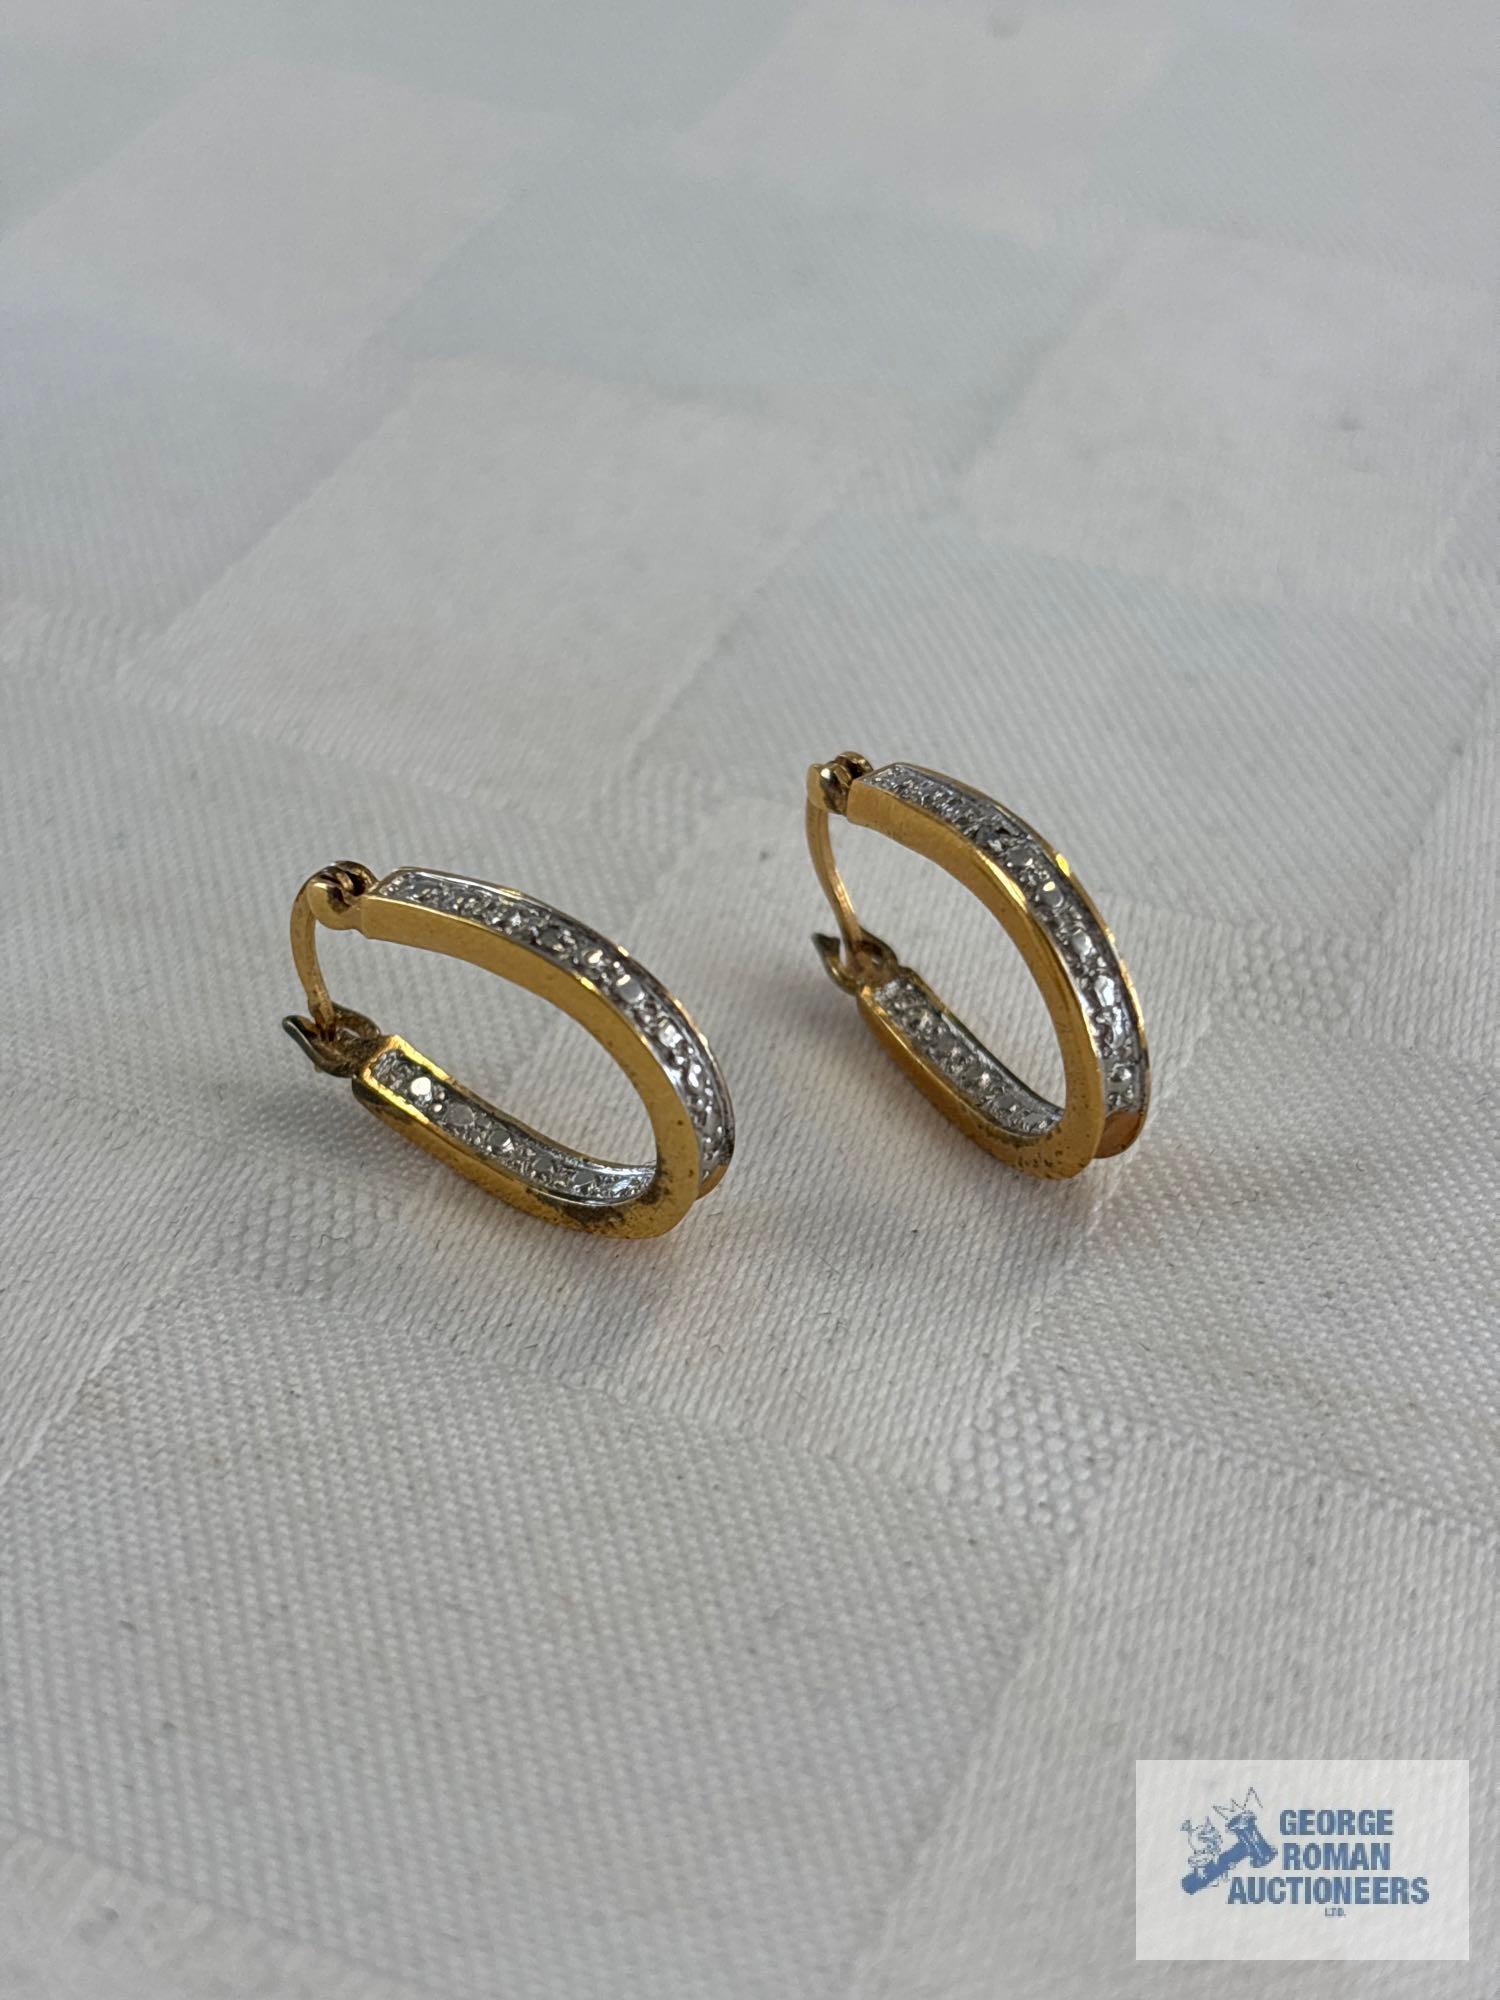 Pair of gold colored hoop earrings, marked 925